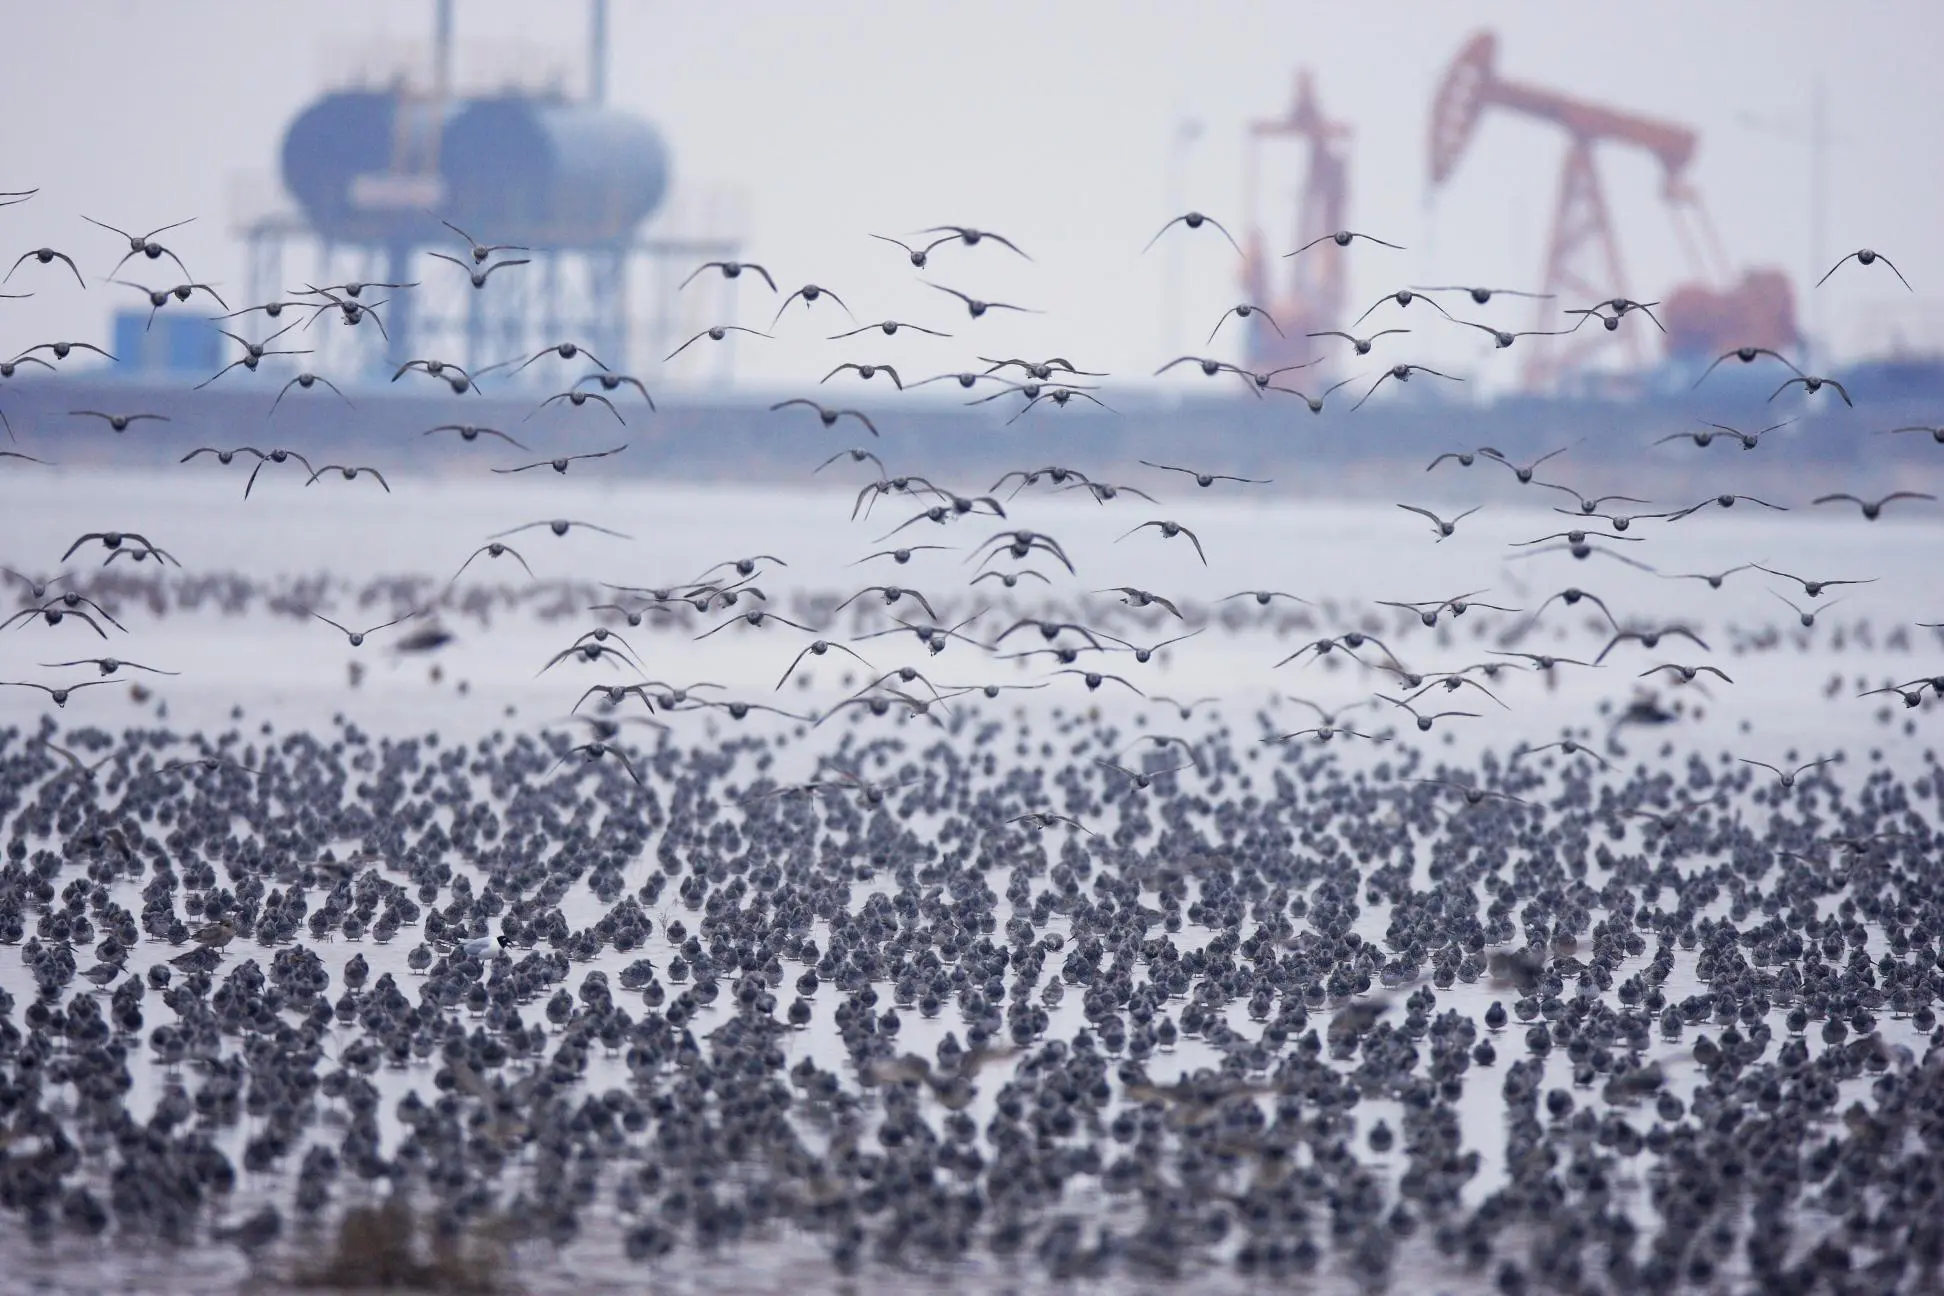 Coastal development and flock of shorebirds on a tidal flat at Shuangtai Hekou National Nature Reserve, China. ©Zhang Ming